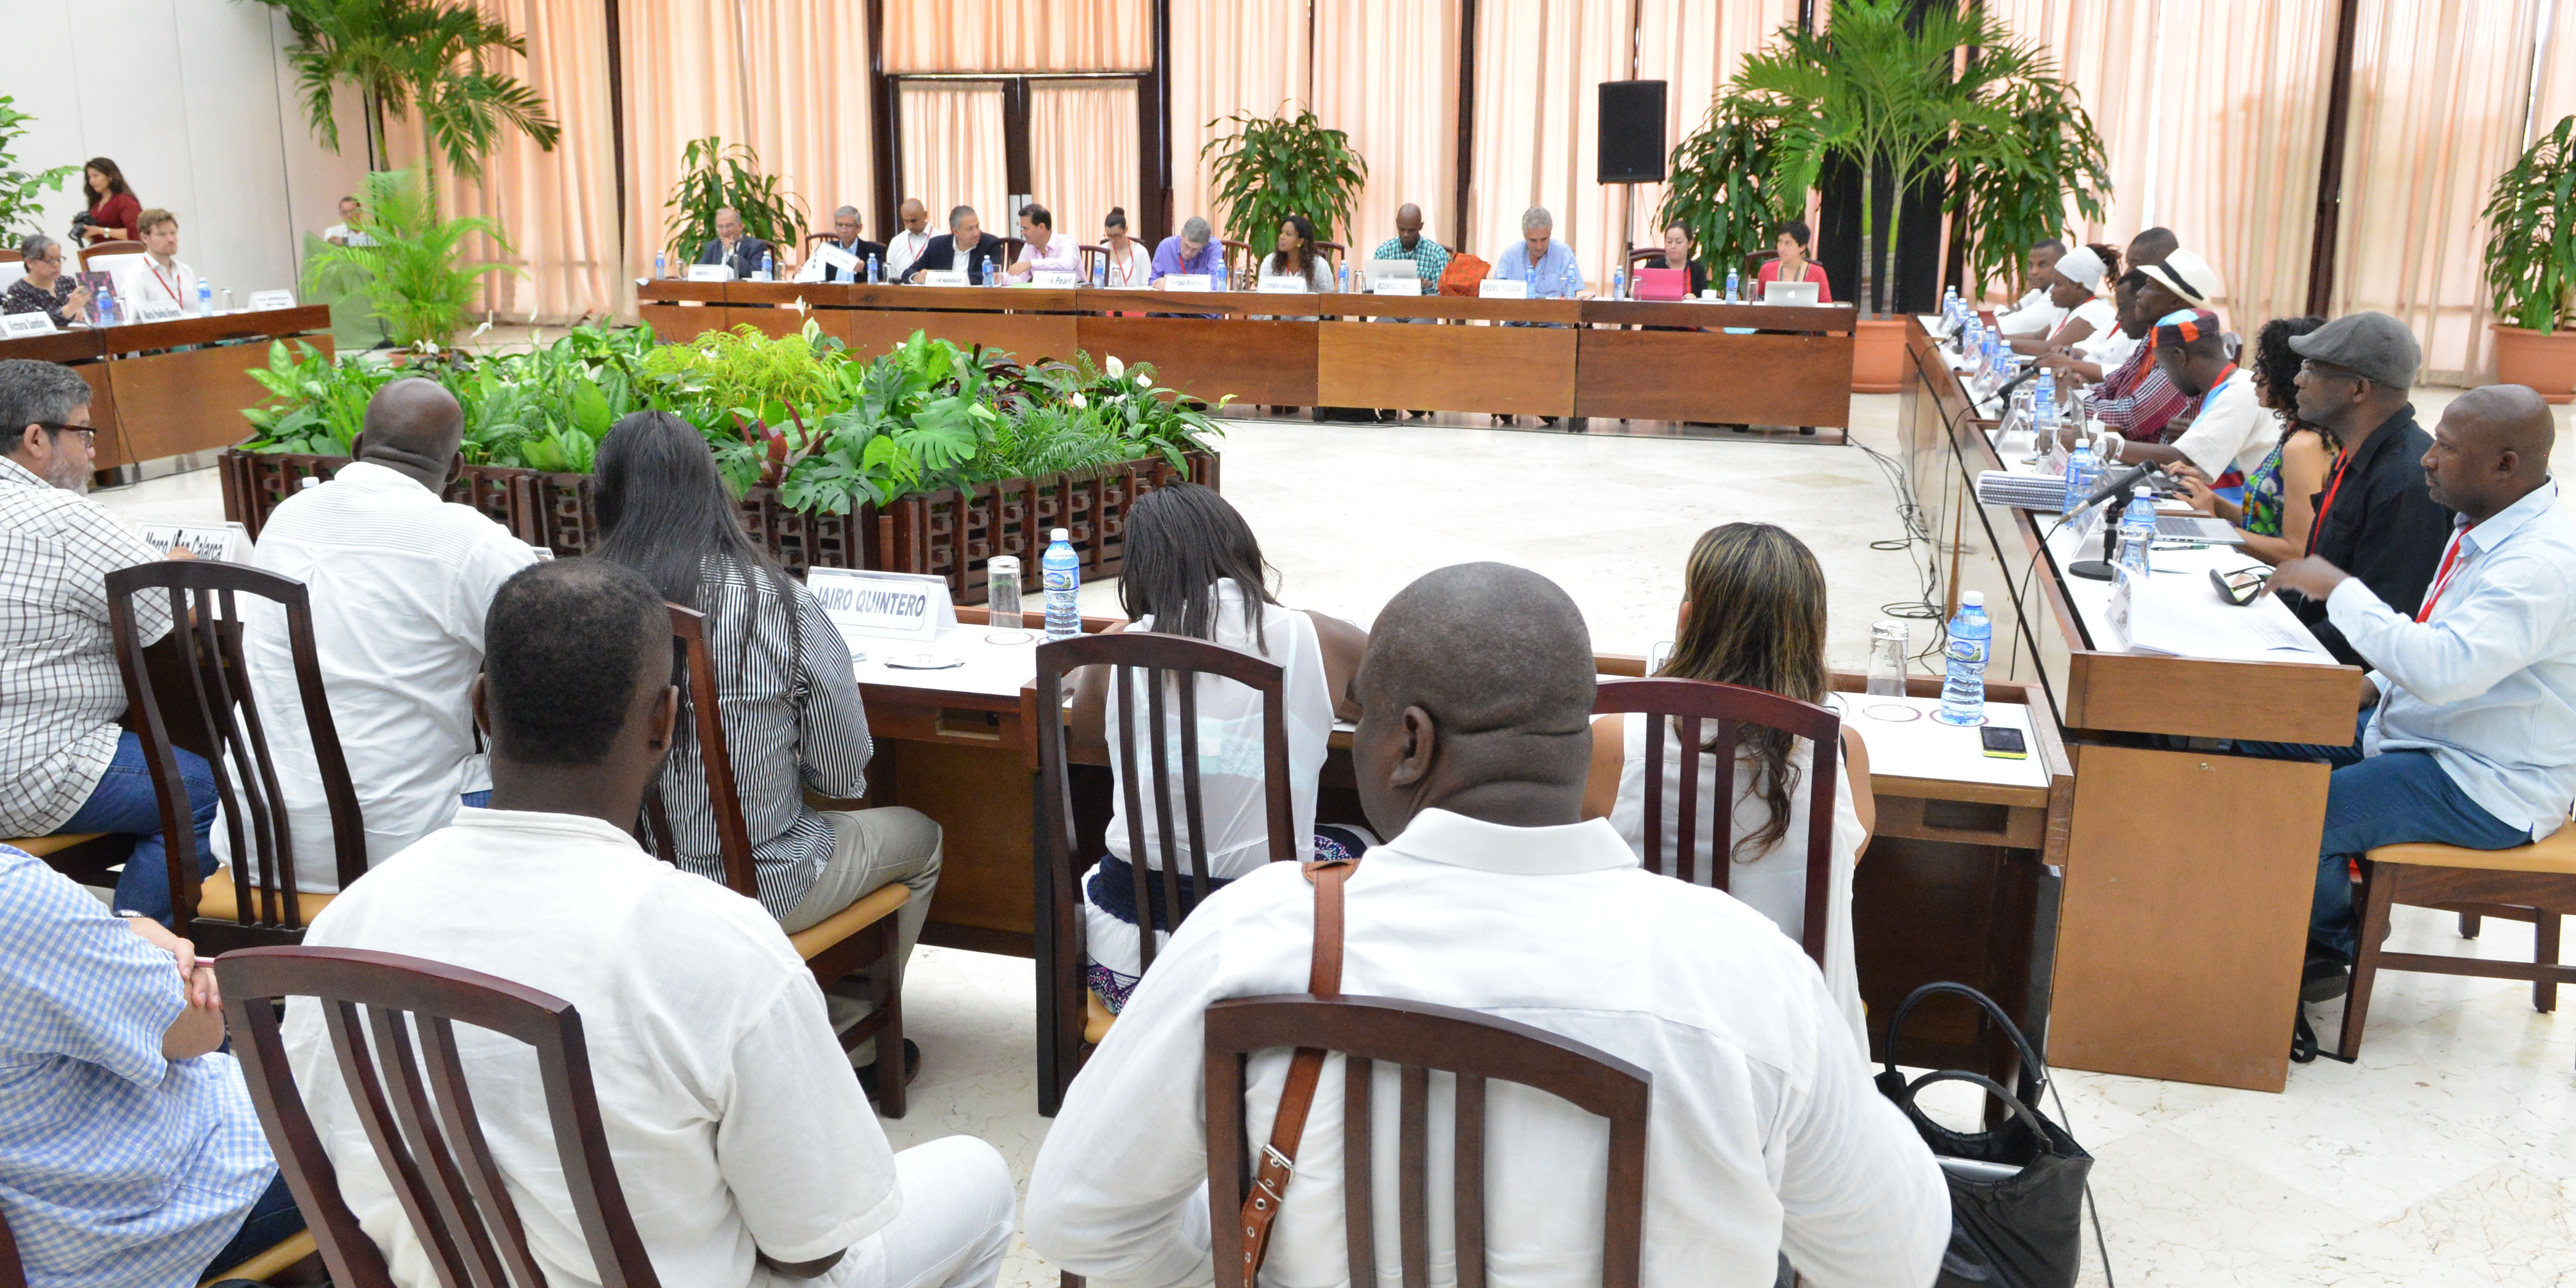 Autoridades dialogaron con integrantes de comunidades afrocolombianas en La Habana.